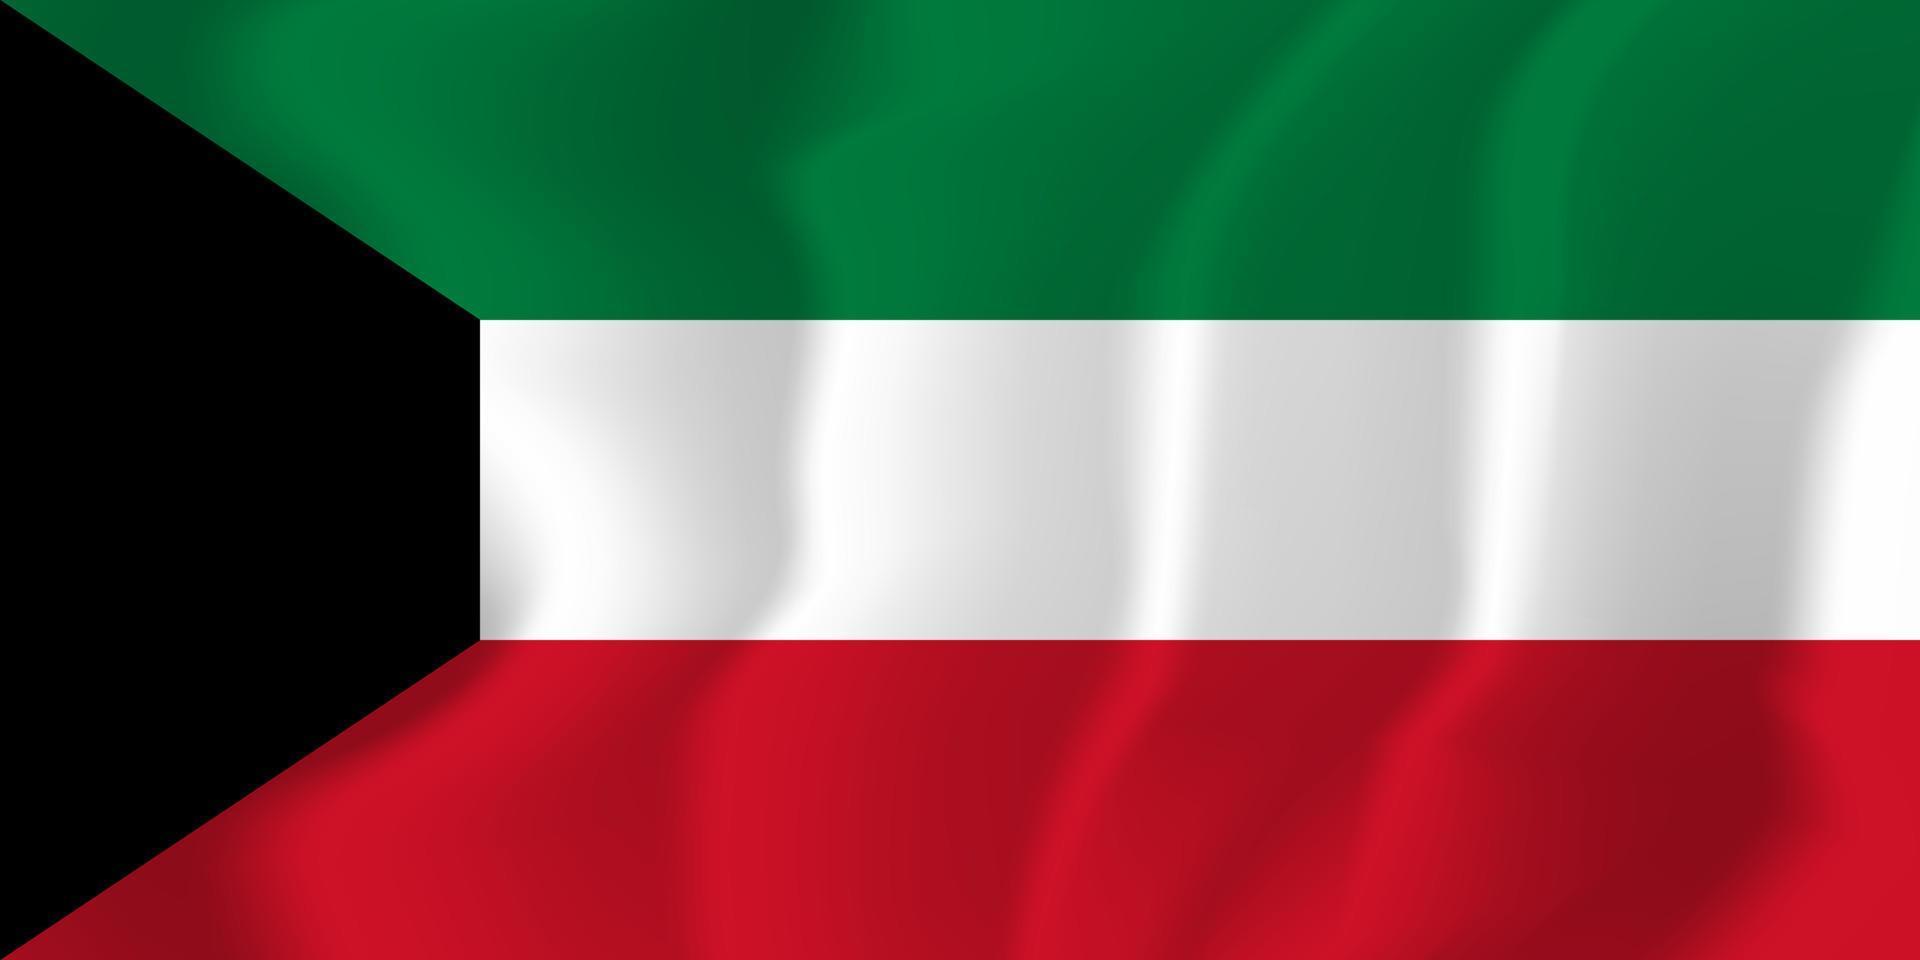 Kuwait National Flag Waving Background Illustration vector